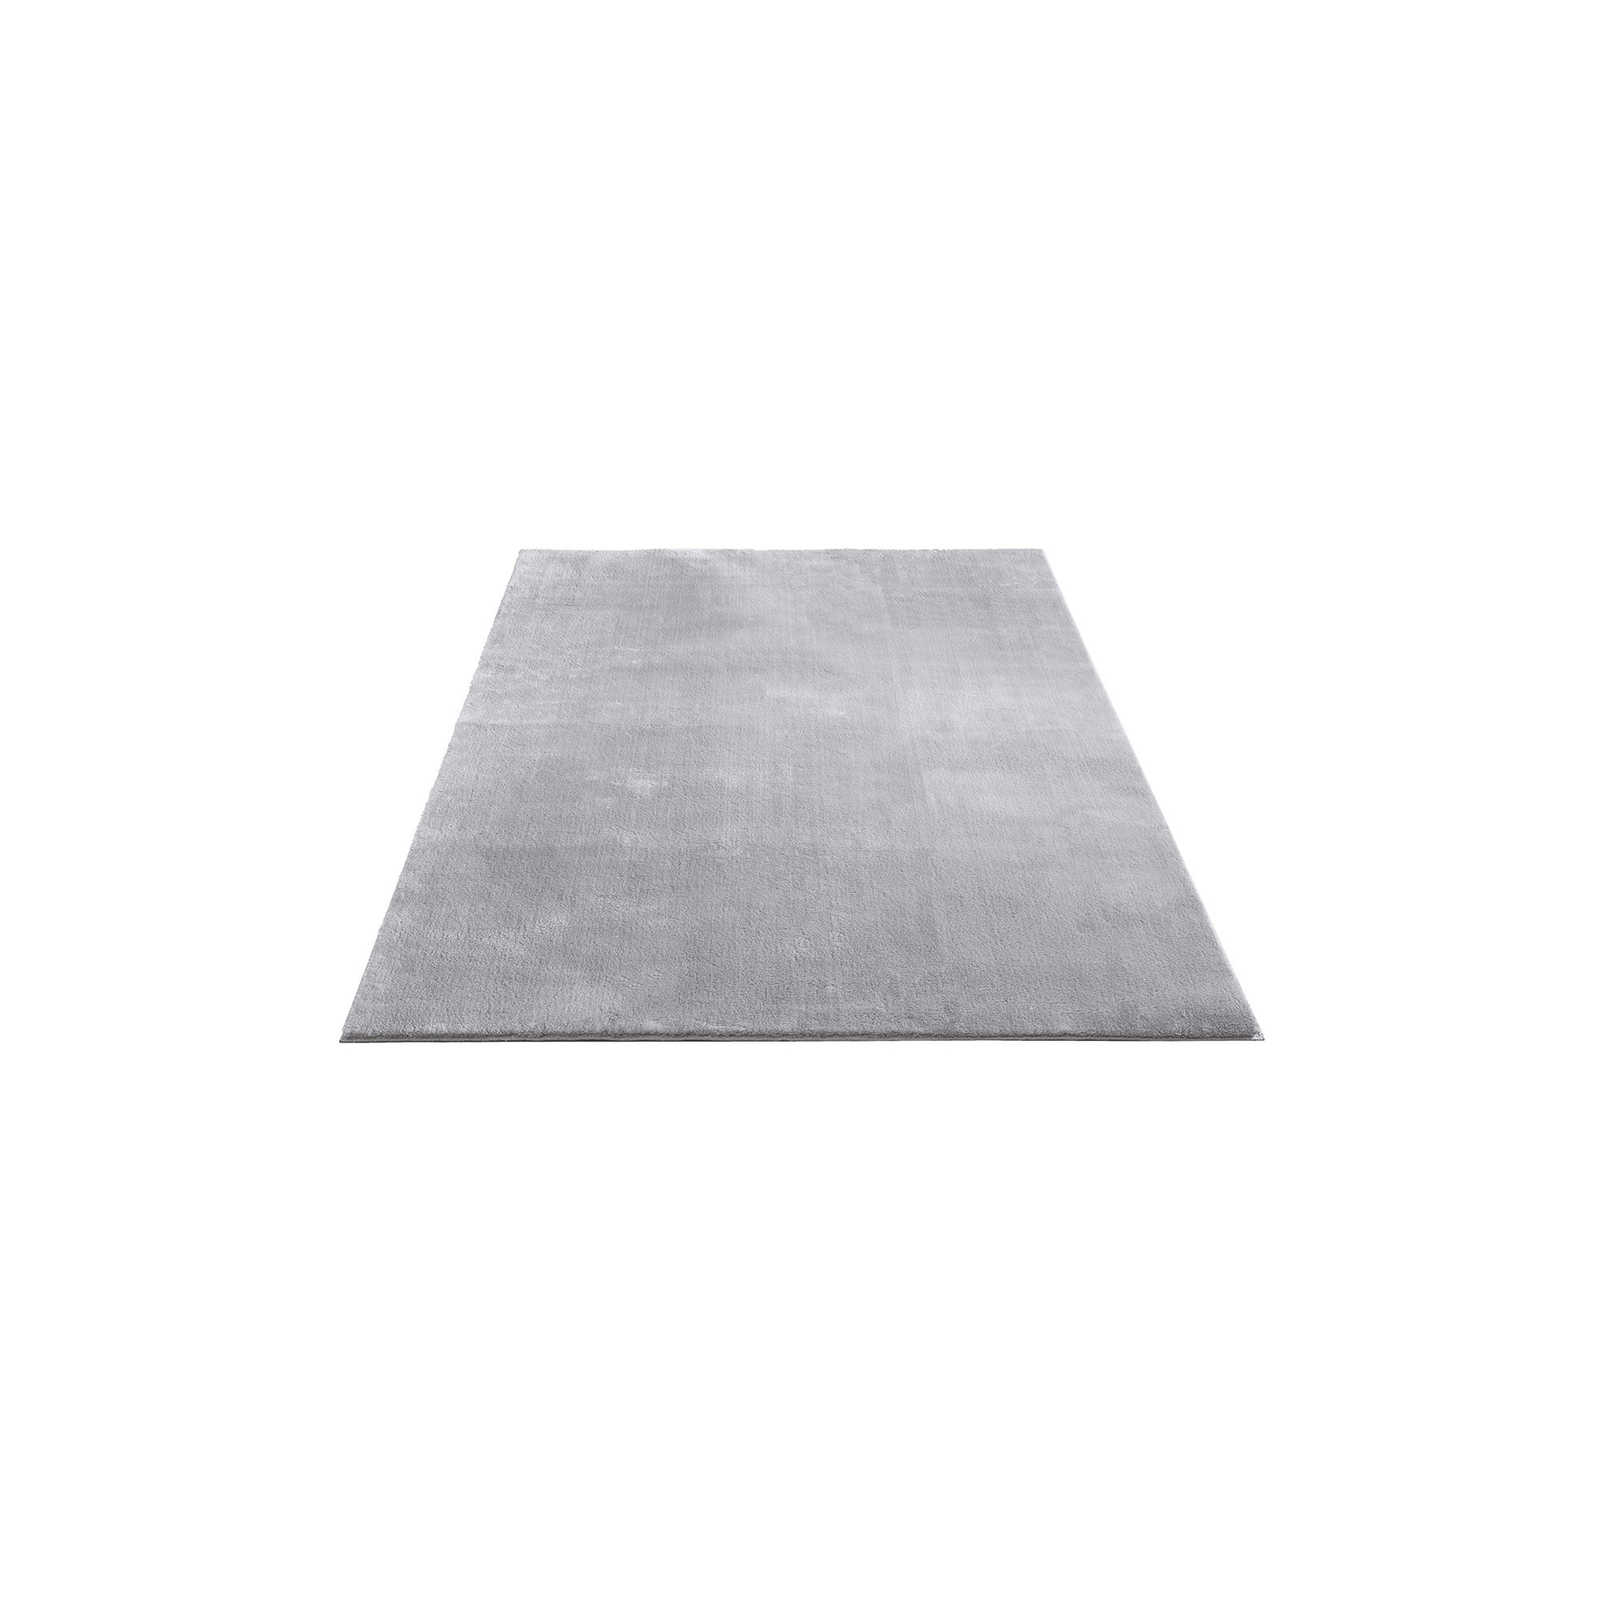 Feiner Hochflor Teppich in Grau – 200 x 140 cm
